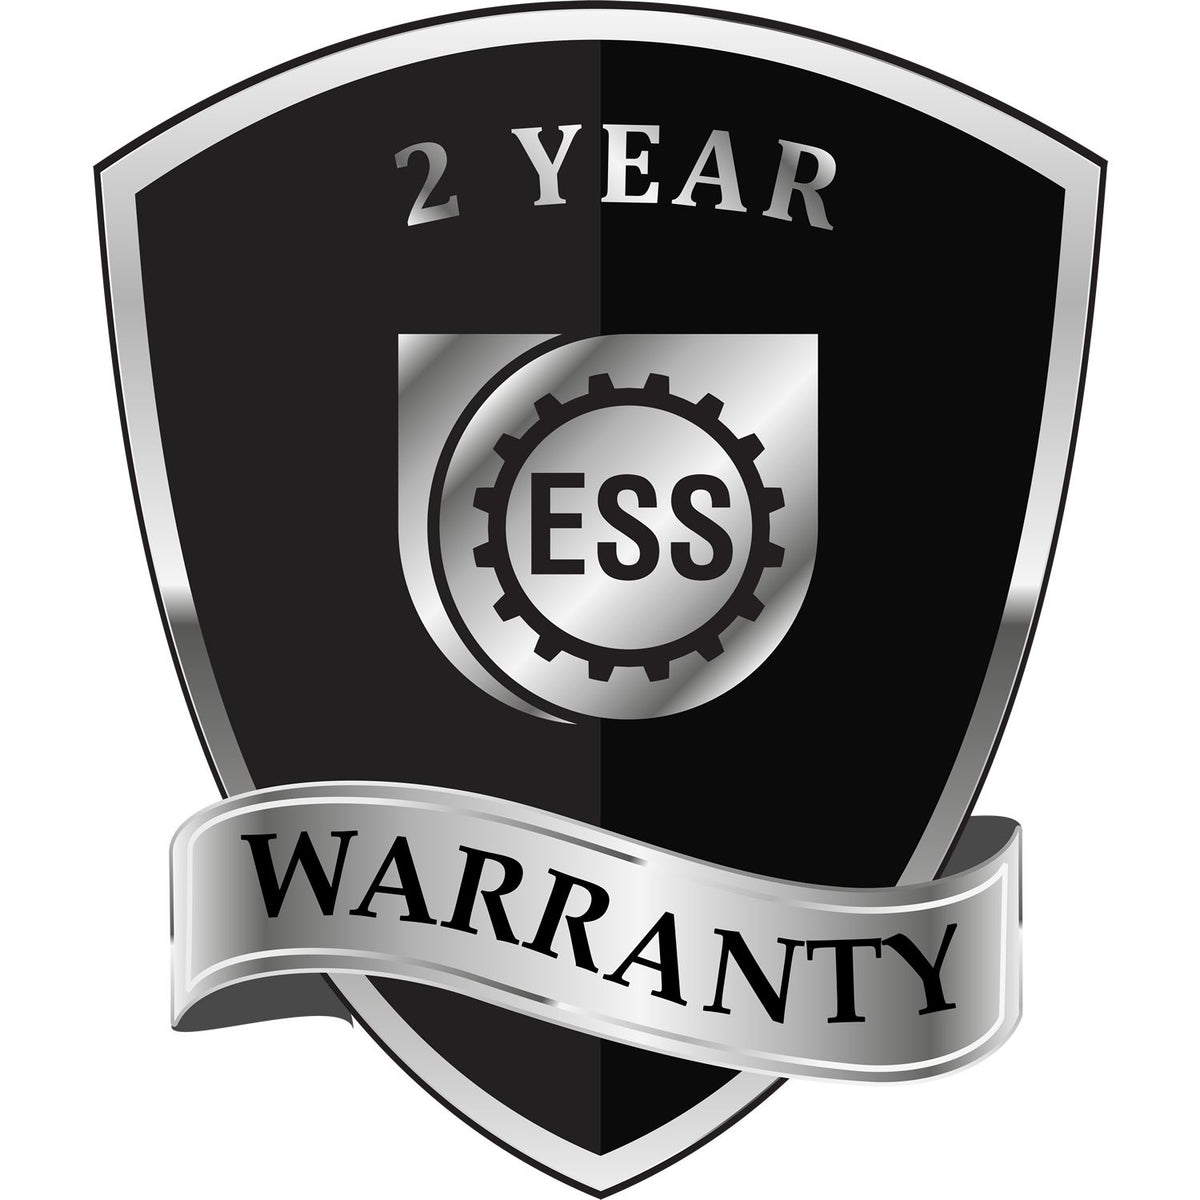 A black and silver badge or emblem showing warranty information for the Handheld South Carolina Professional Geologist Embosser